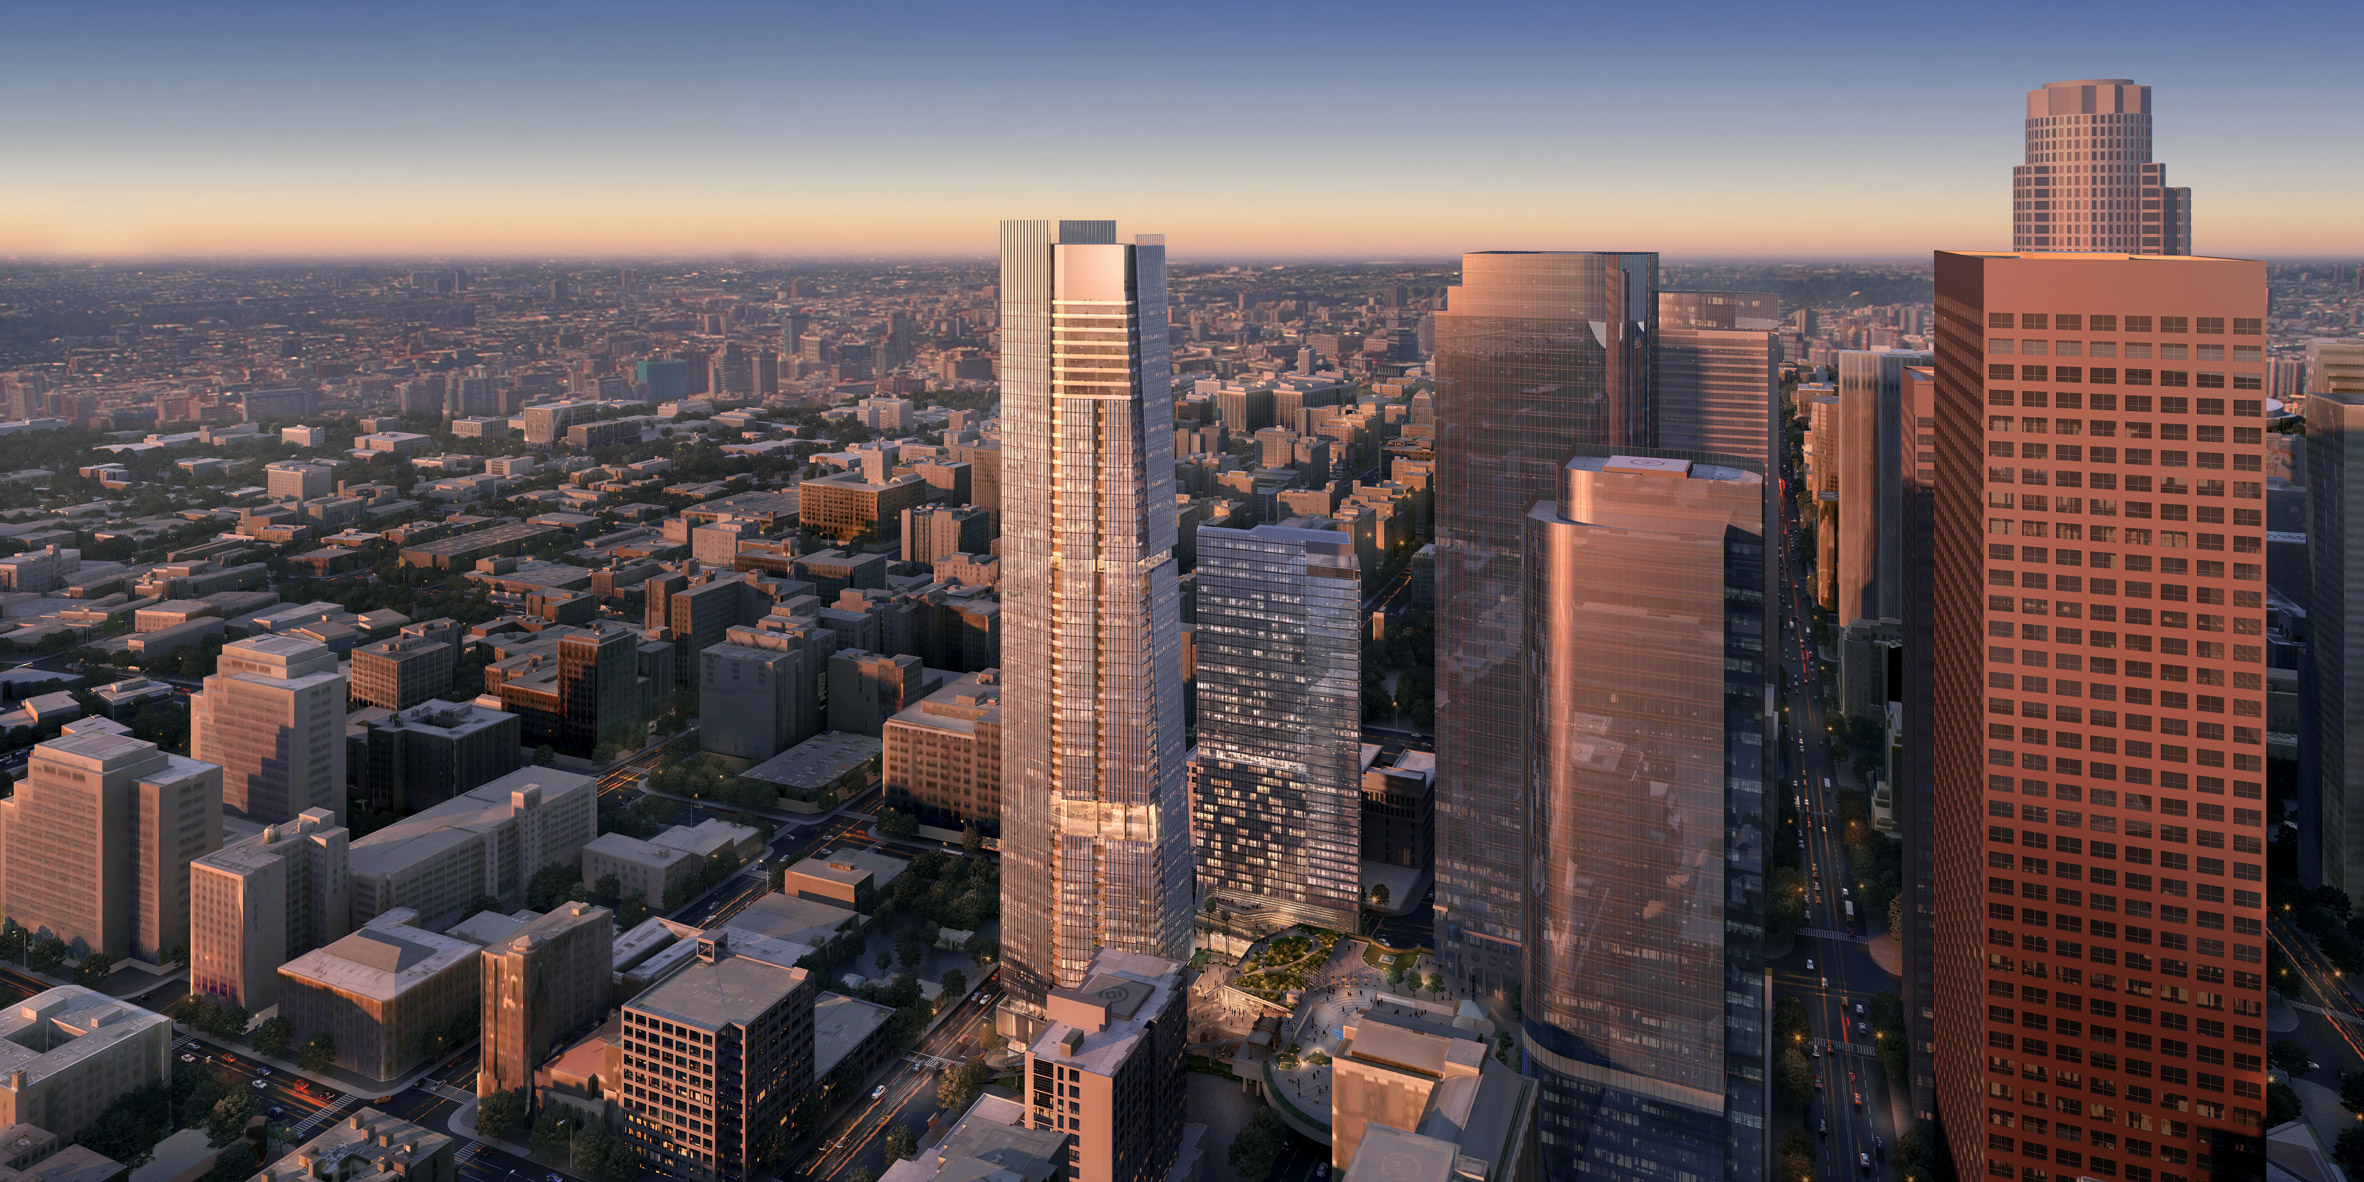 Aerial nighttime render of planned Angels Landing skyscraper in Los Angeles by Handel Architects